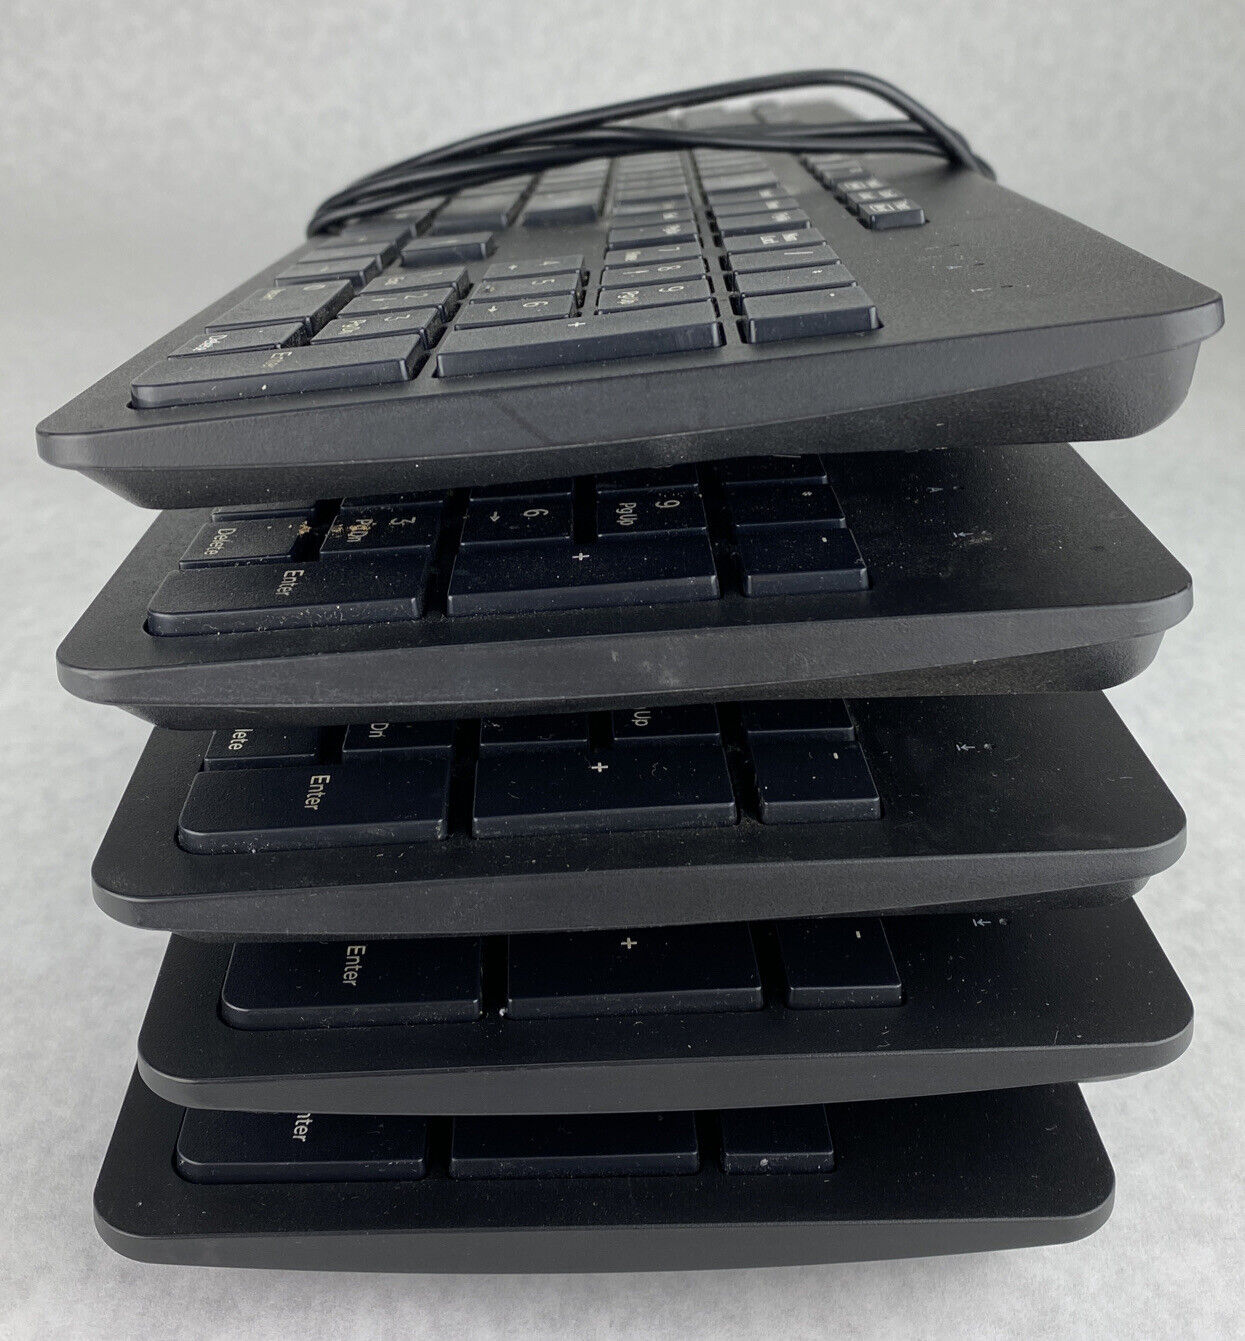 Lot(5) HP 803181-001 Slim USB Wired Enhanced Keyboard KBAR211 Genuine OEM